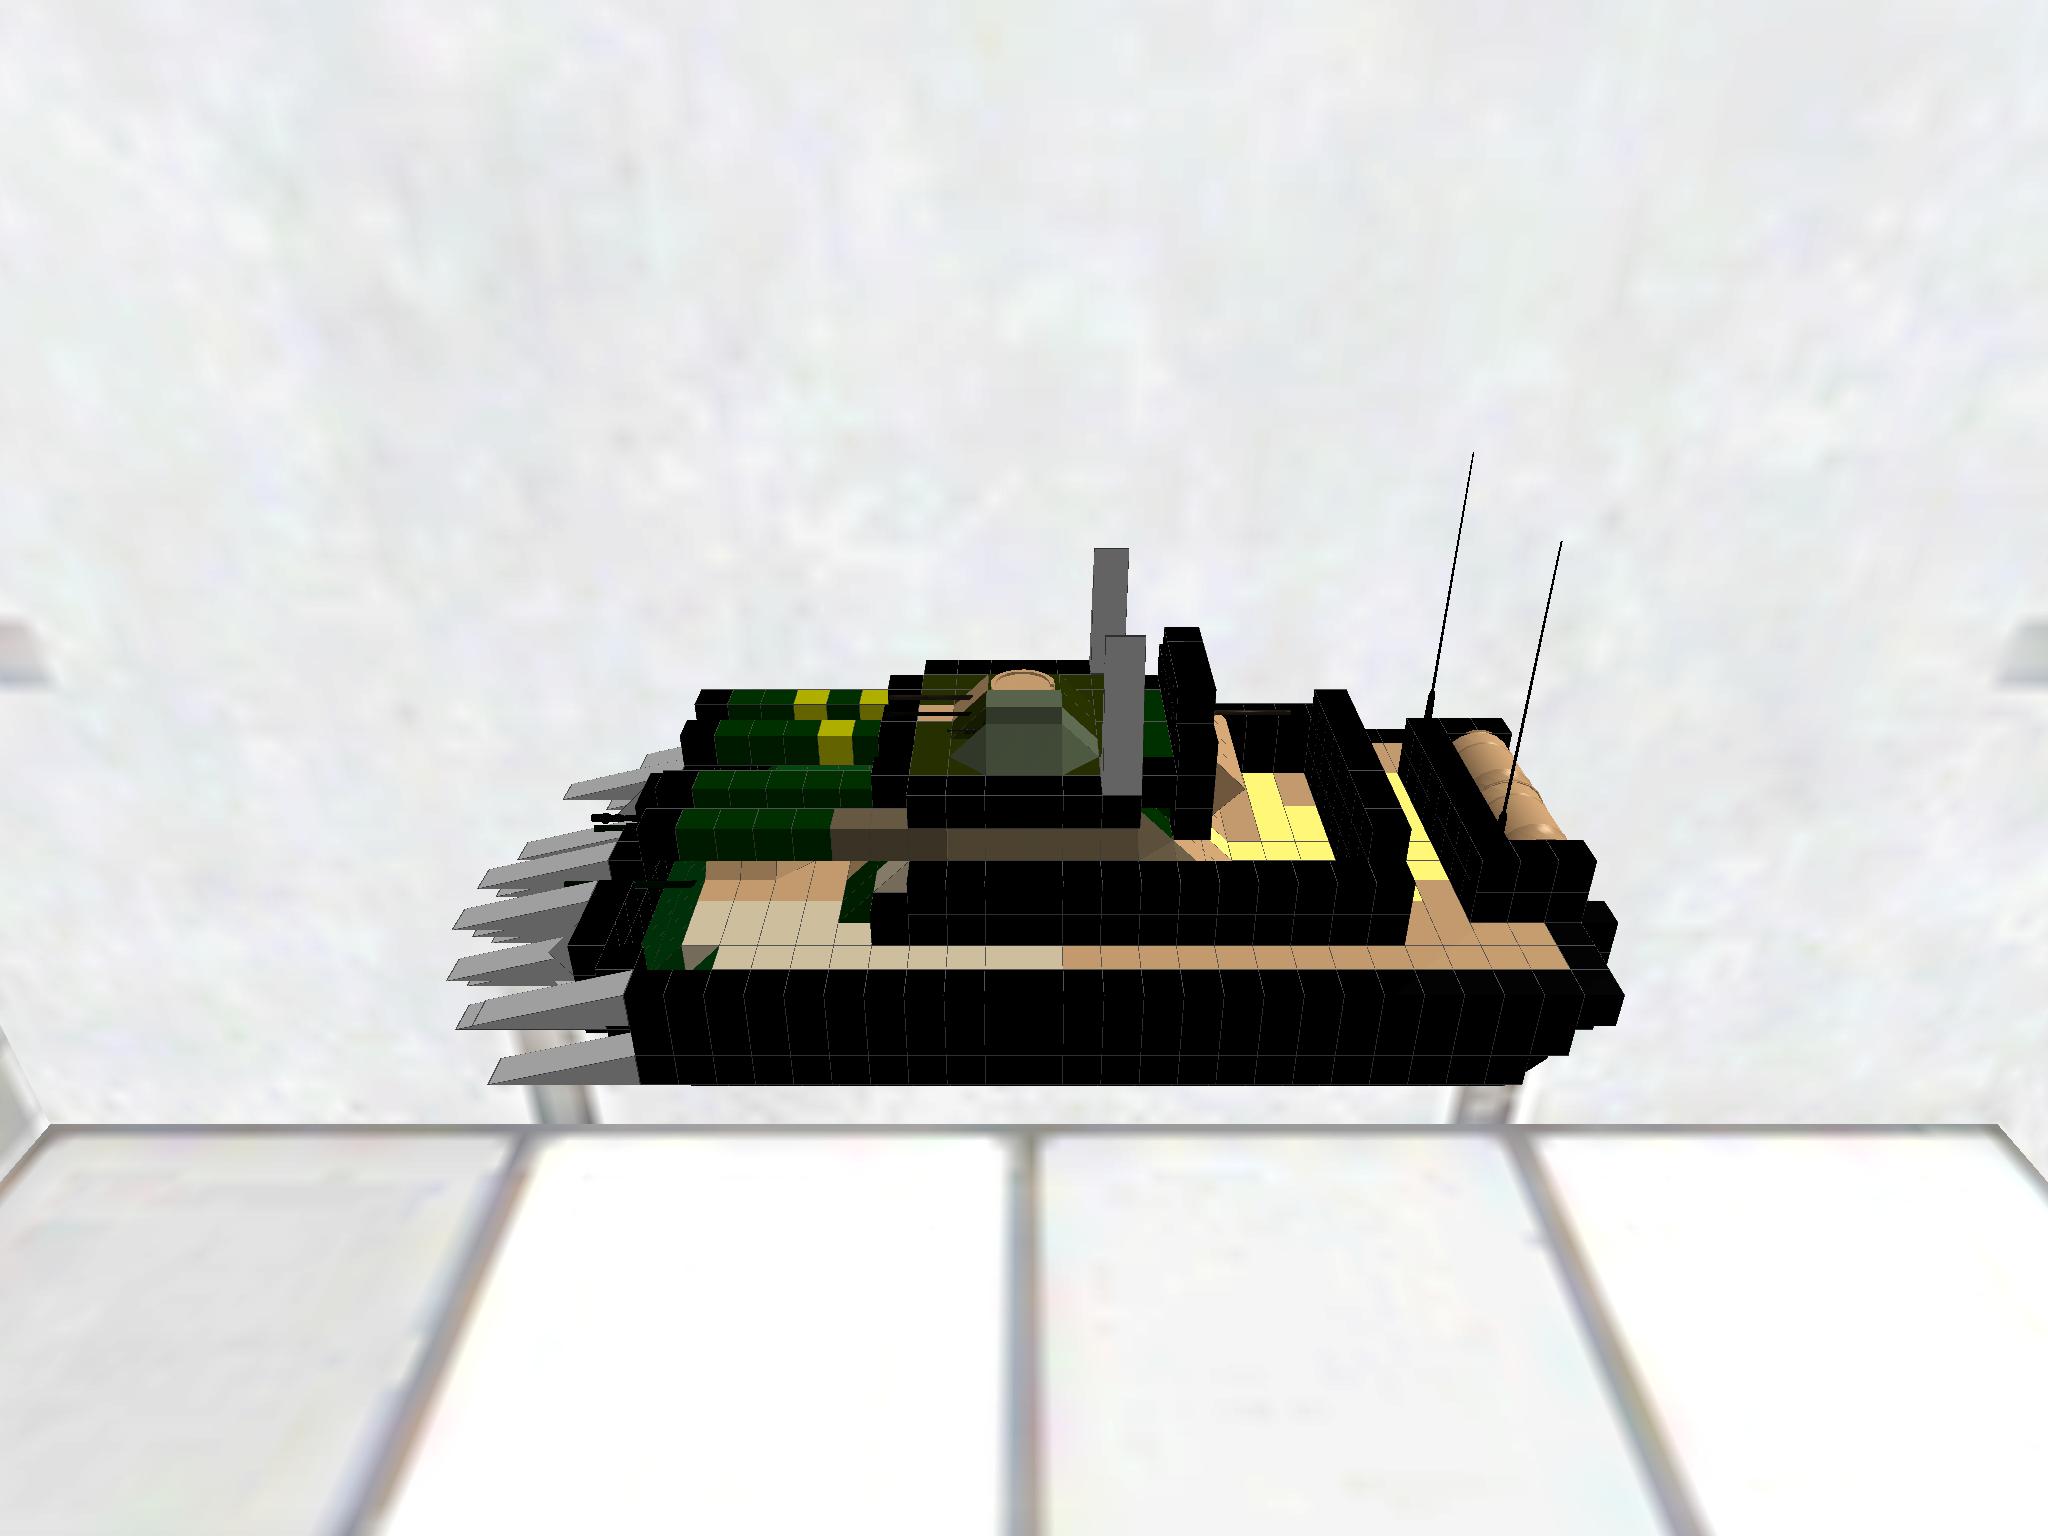 Futuristic armorned tank type2